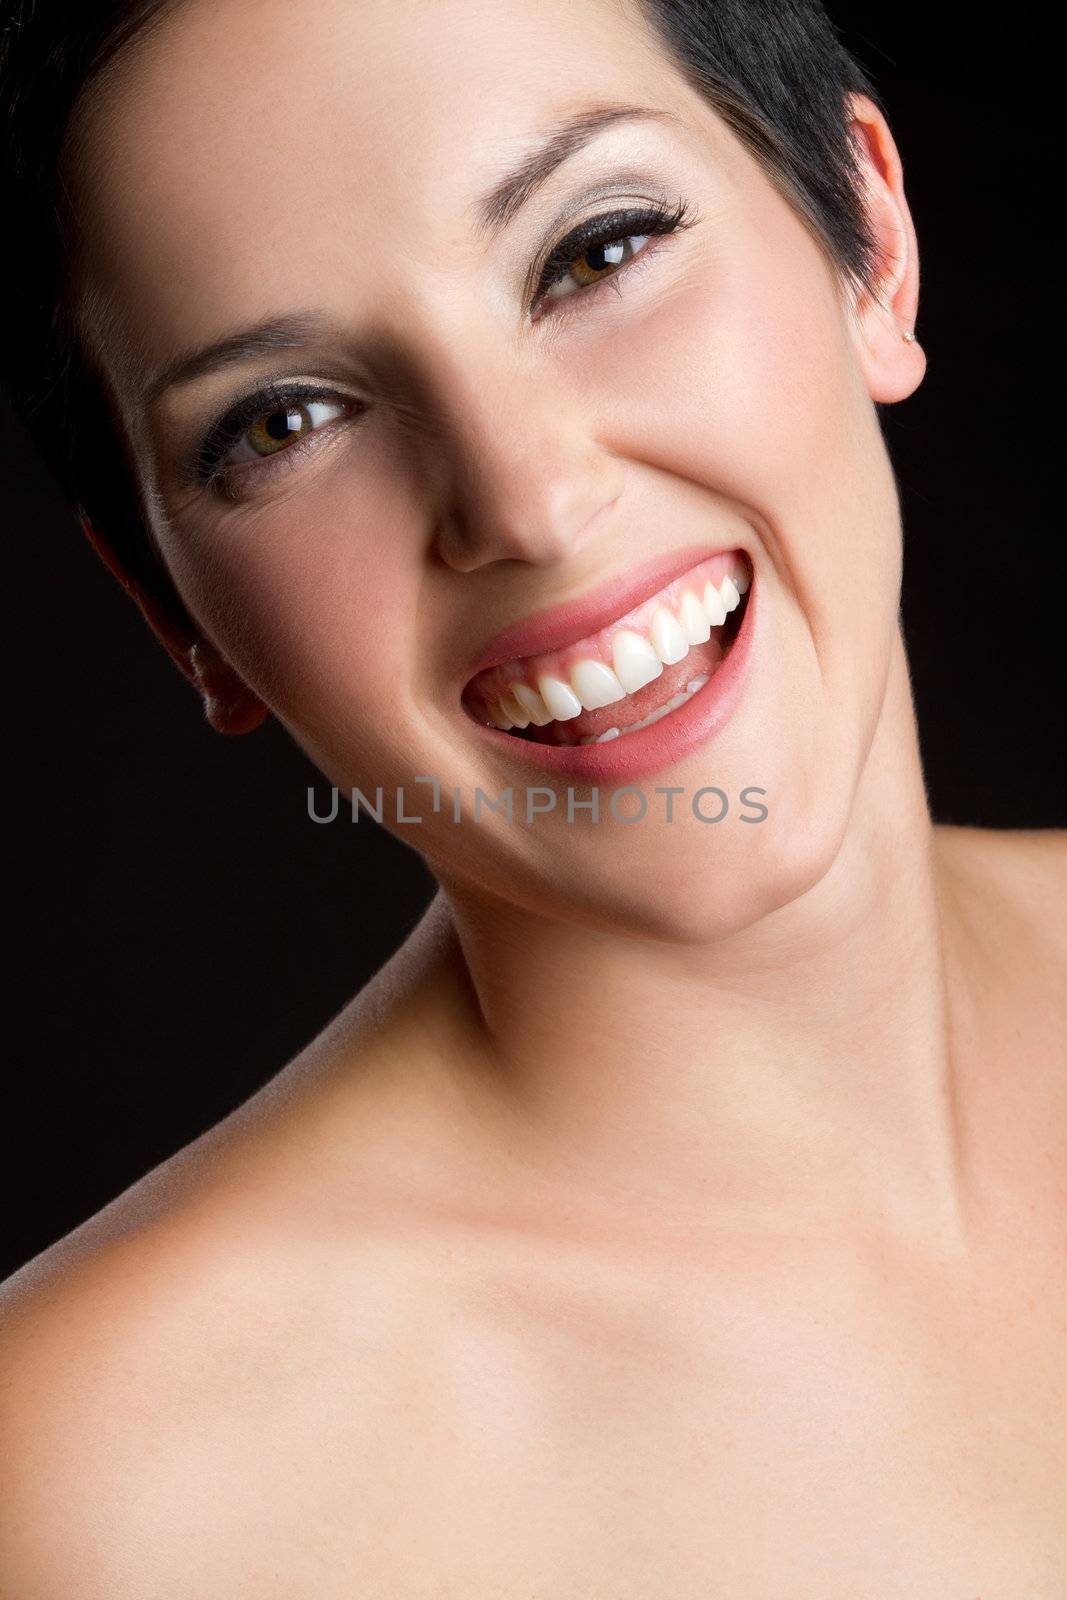 Smiling Woman by keeweeboy